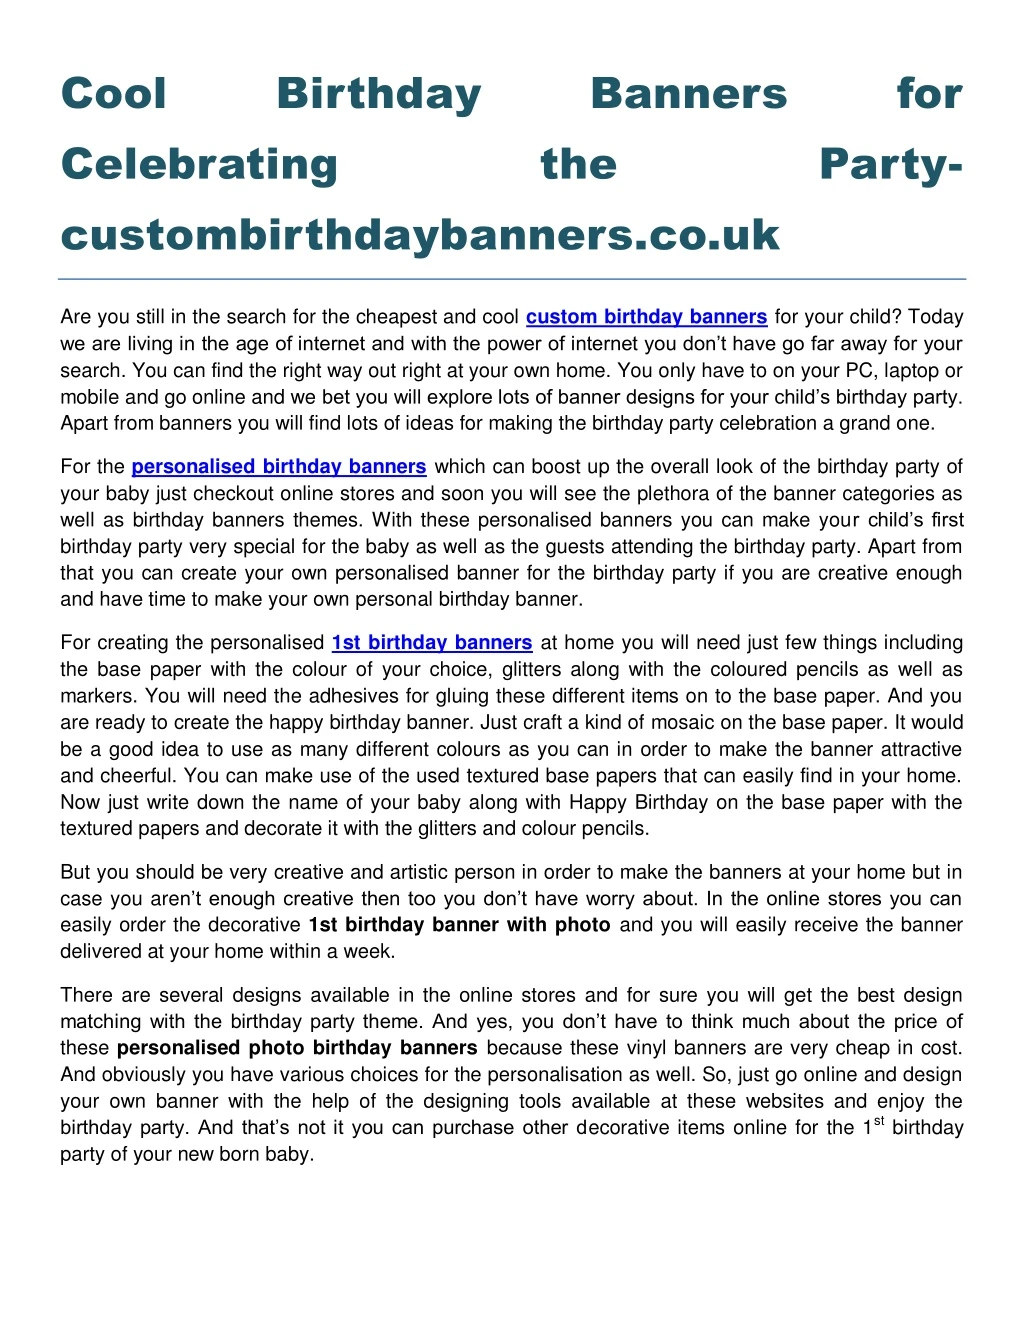 cool celebrating custombirthdaybanners co uk n.